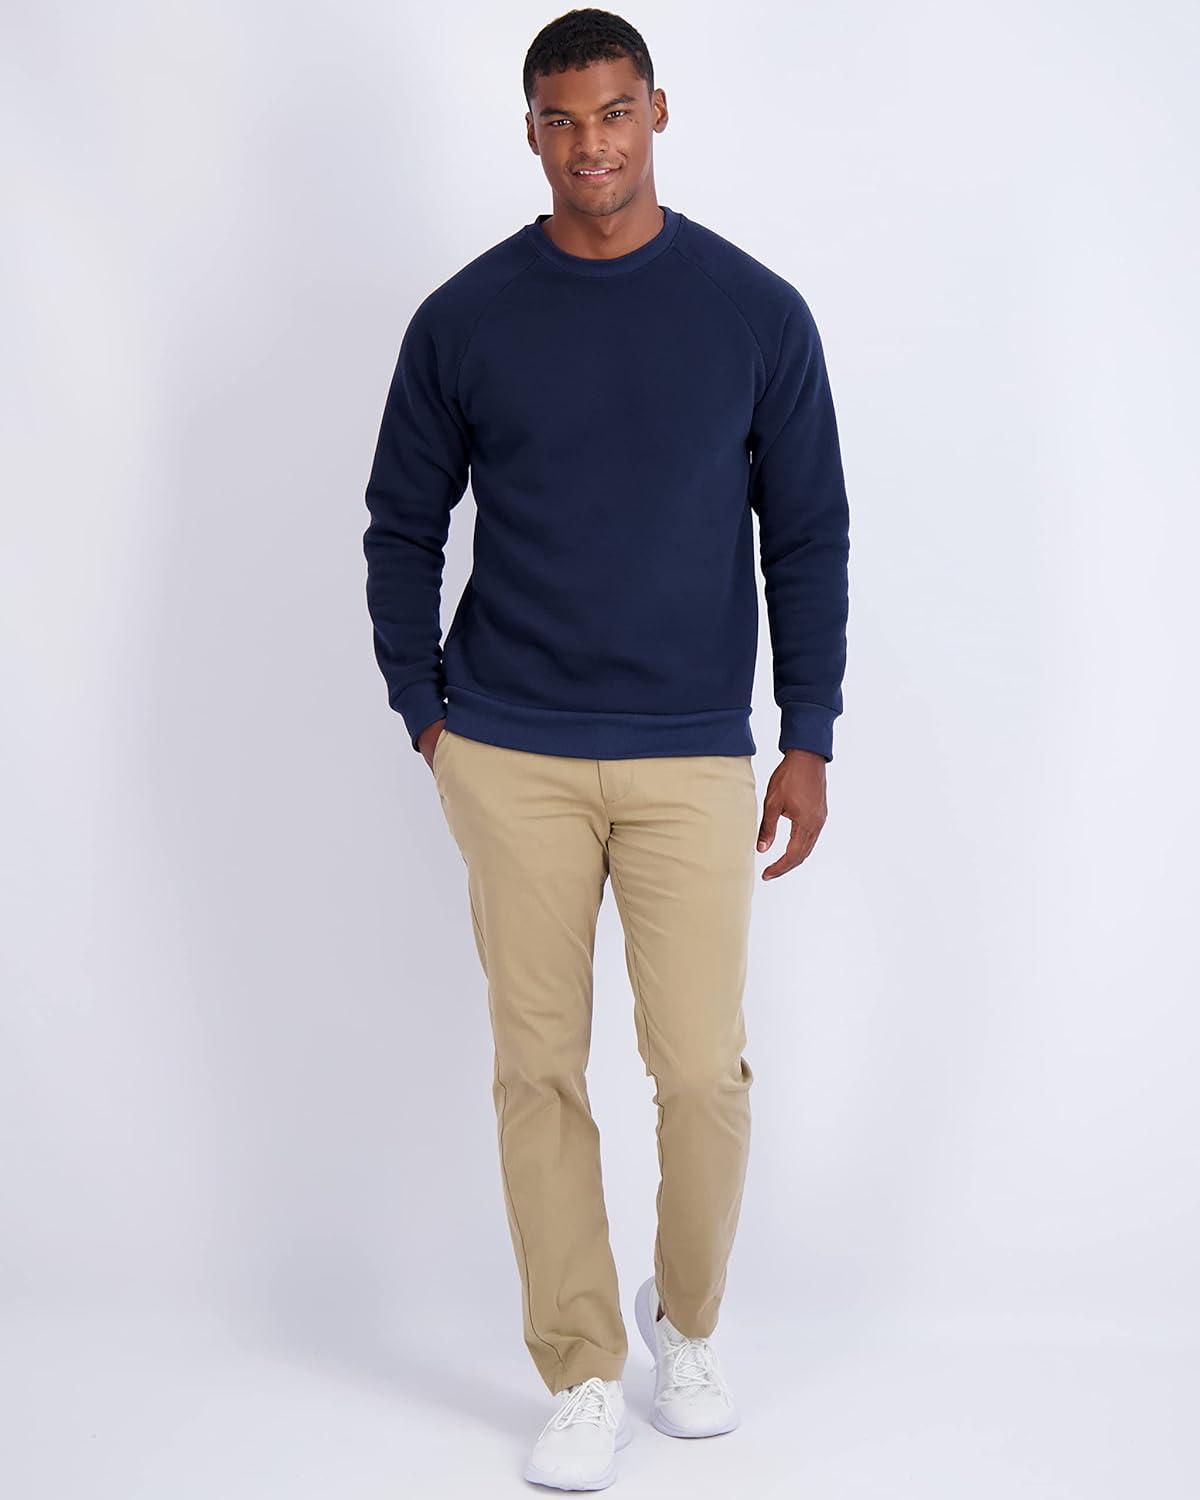 Men's Big & Tall Sweatshirts & Sweatpants